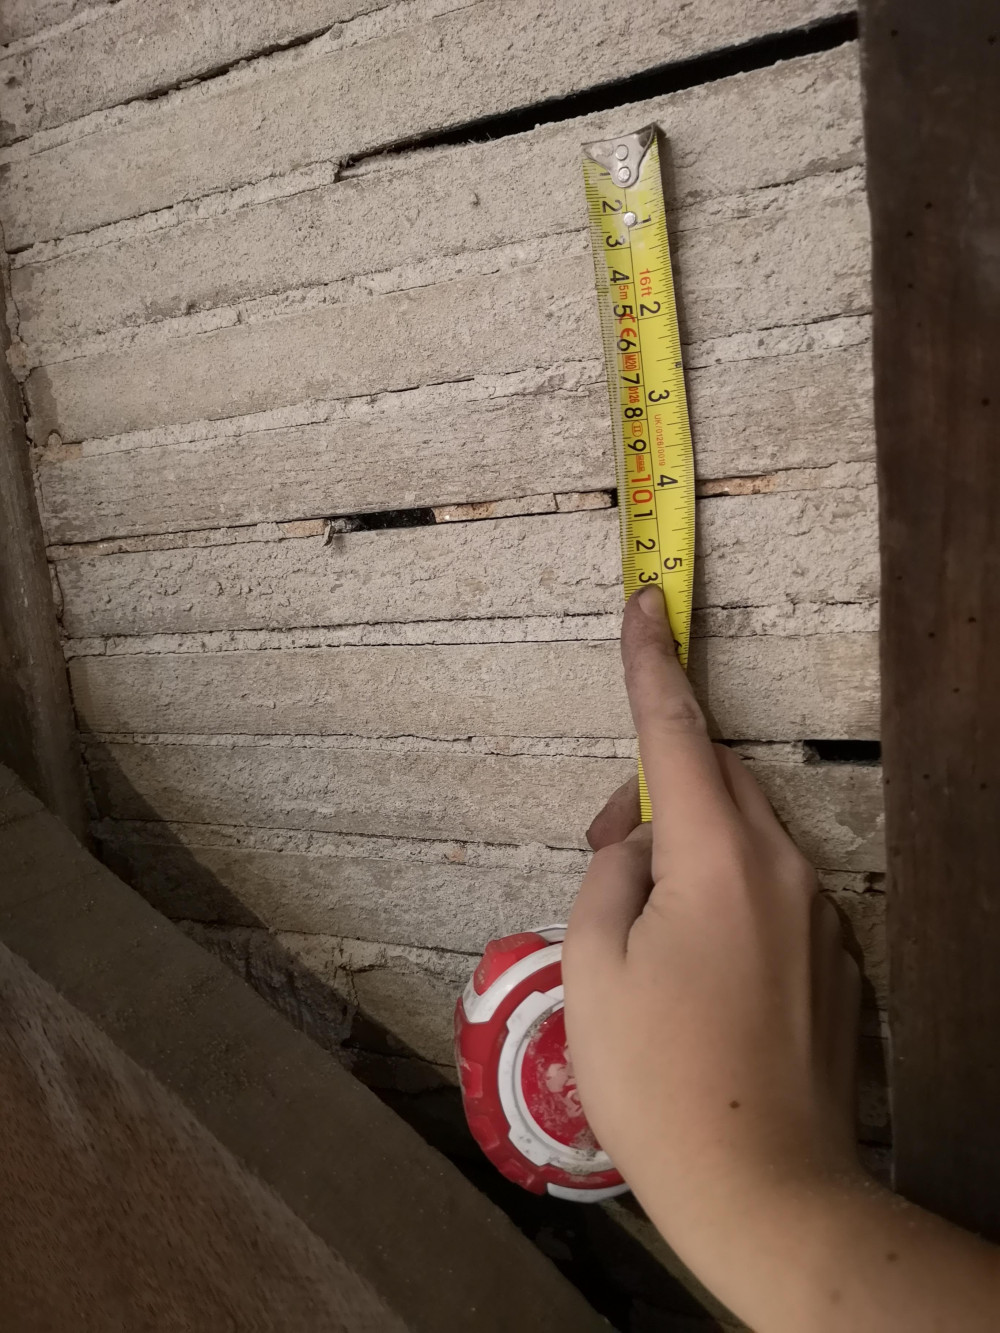 measuring gap between lath